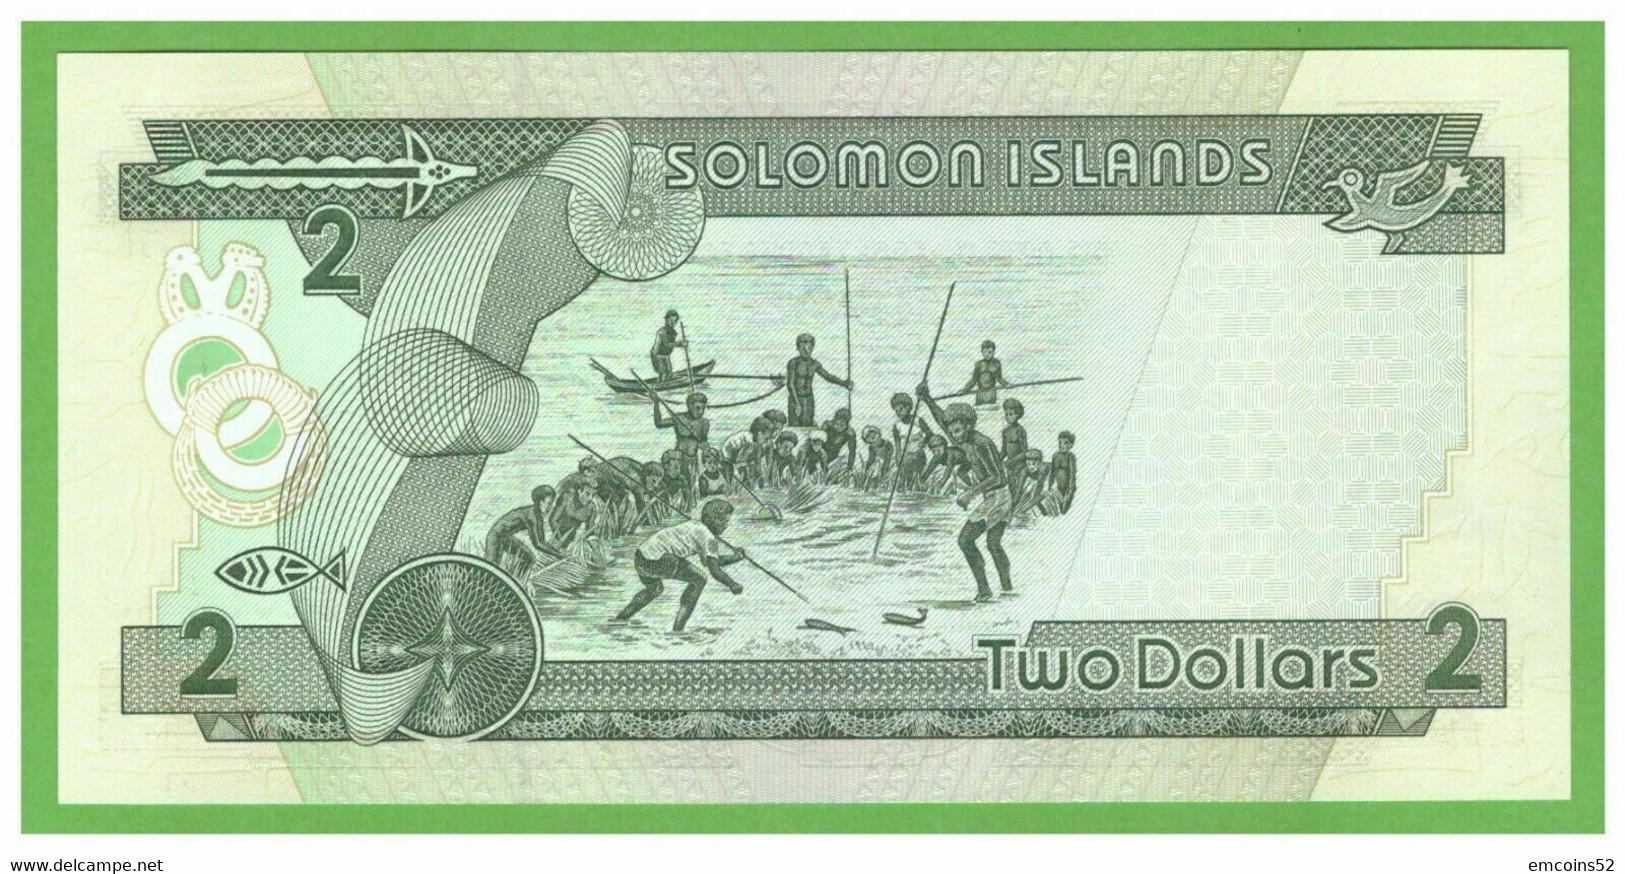 SOLOMON ISLANDS 2 DOLLARS 1997  P-18  UNC - Solomon Islands